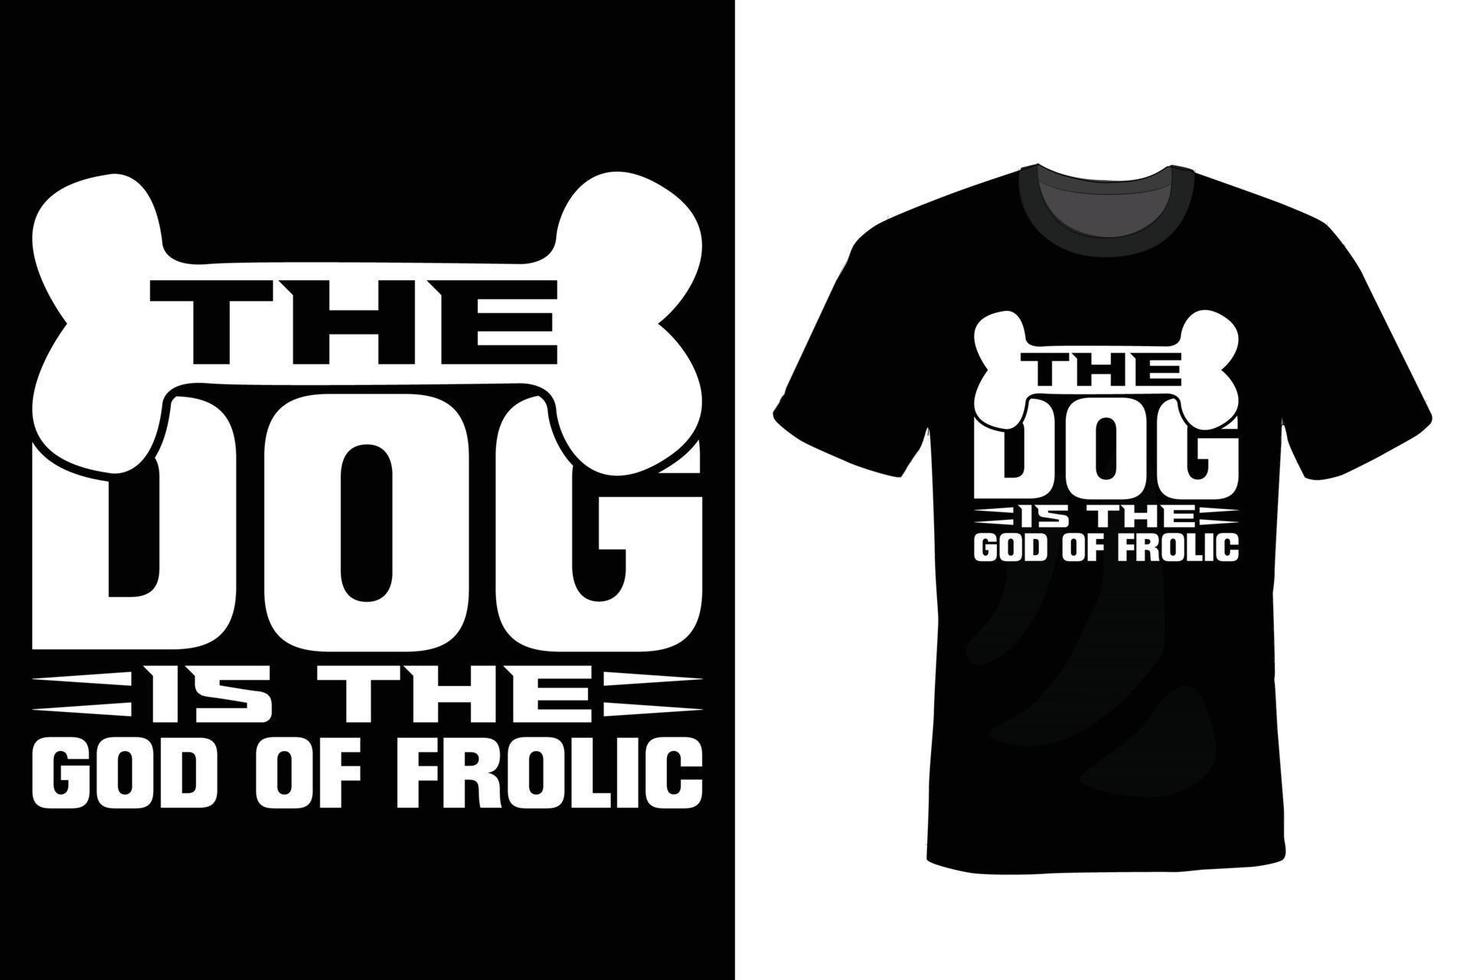 Dog T shirt design, vintage, typography vector